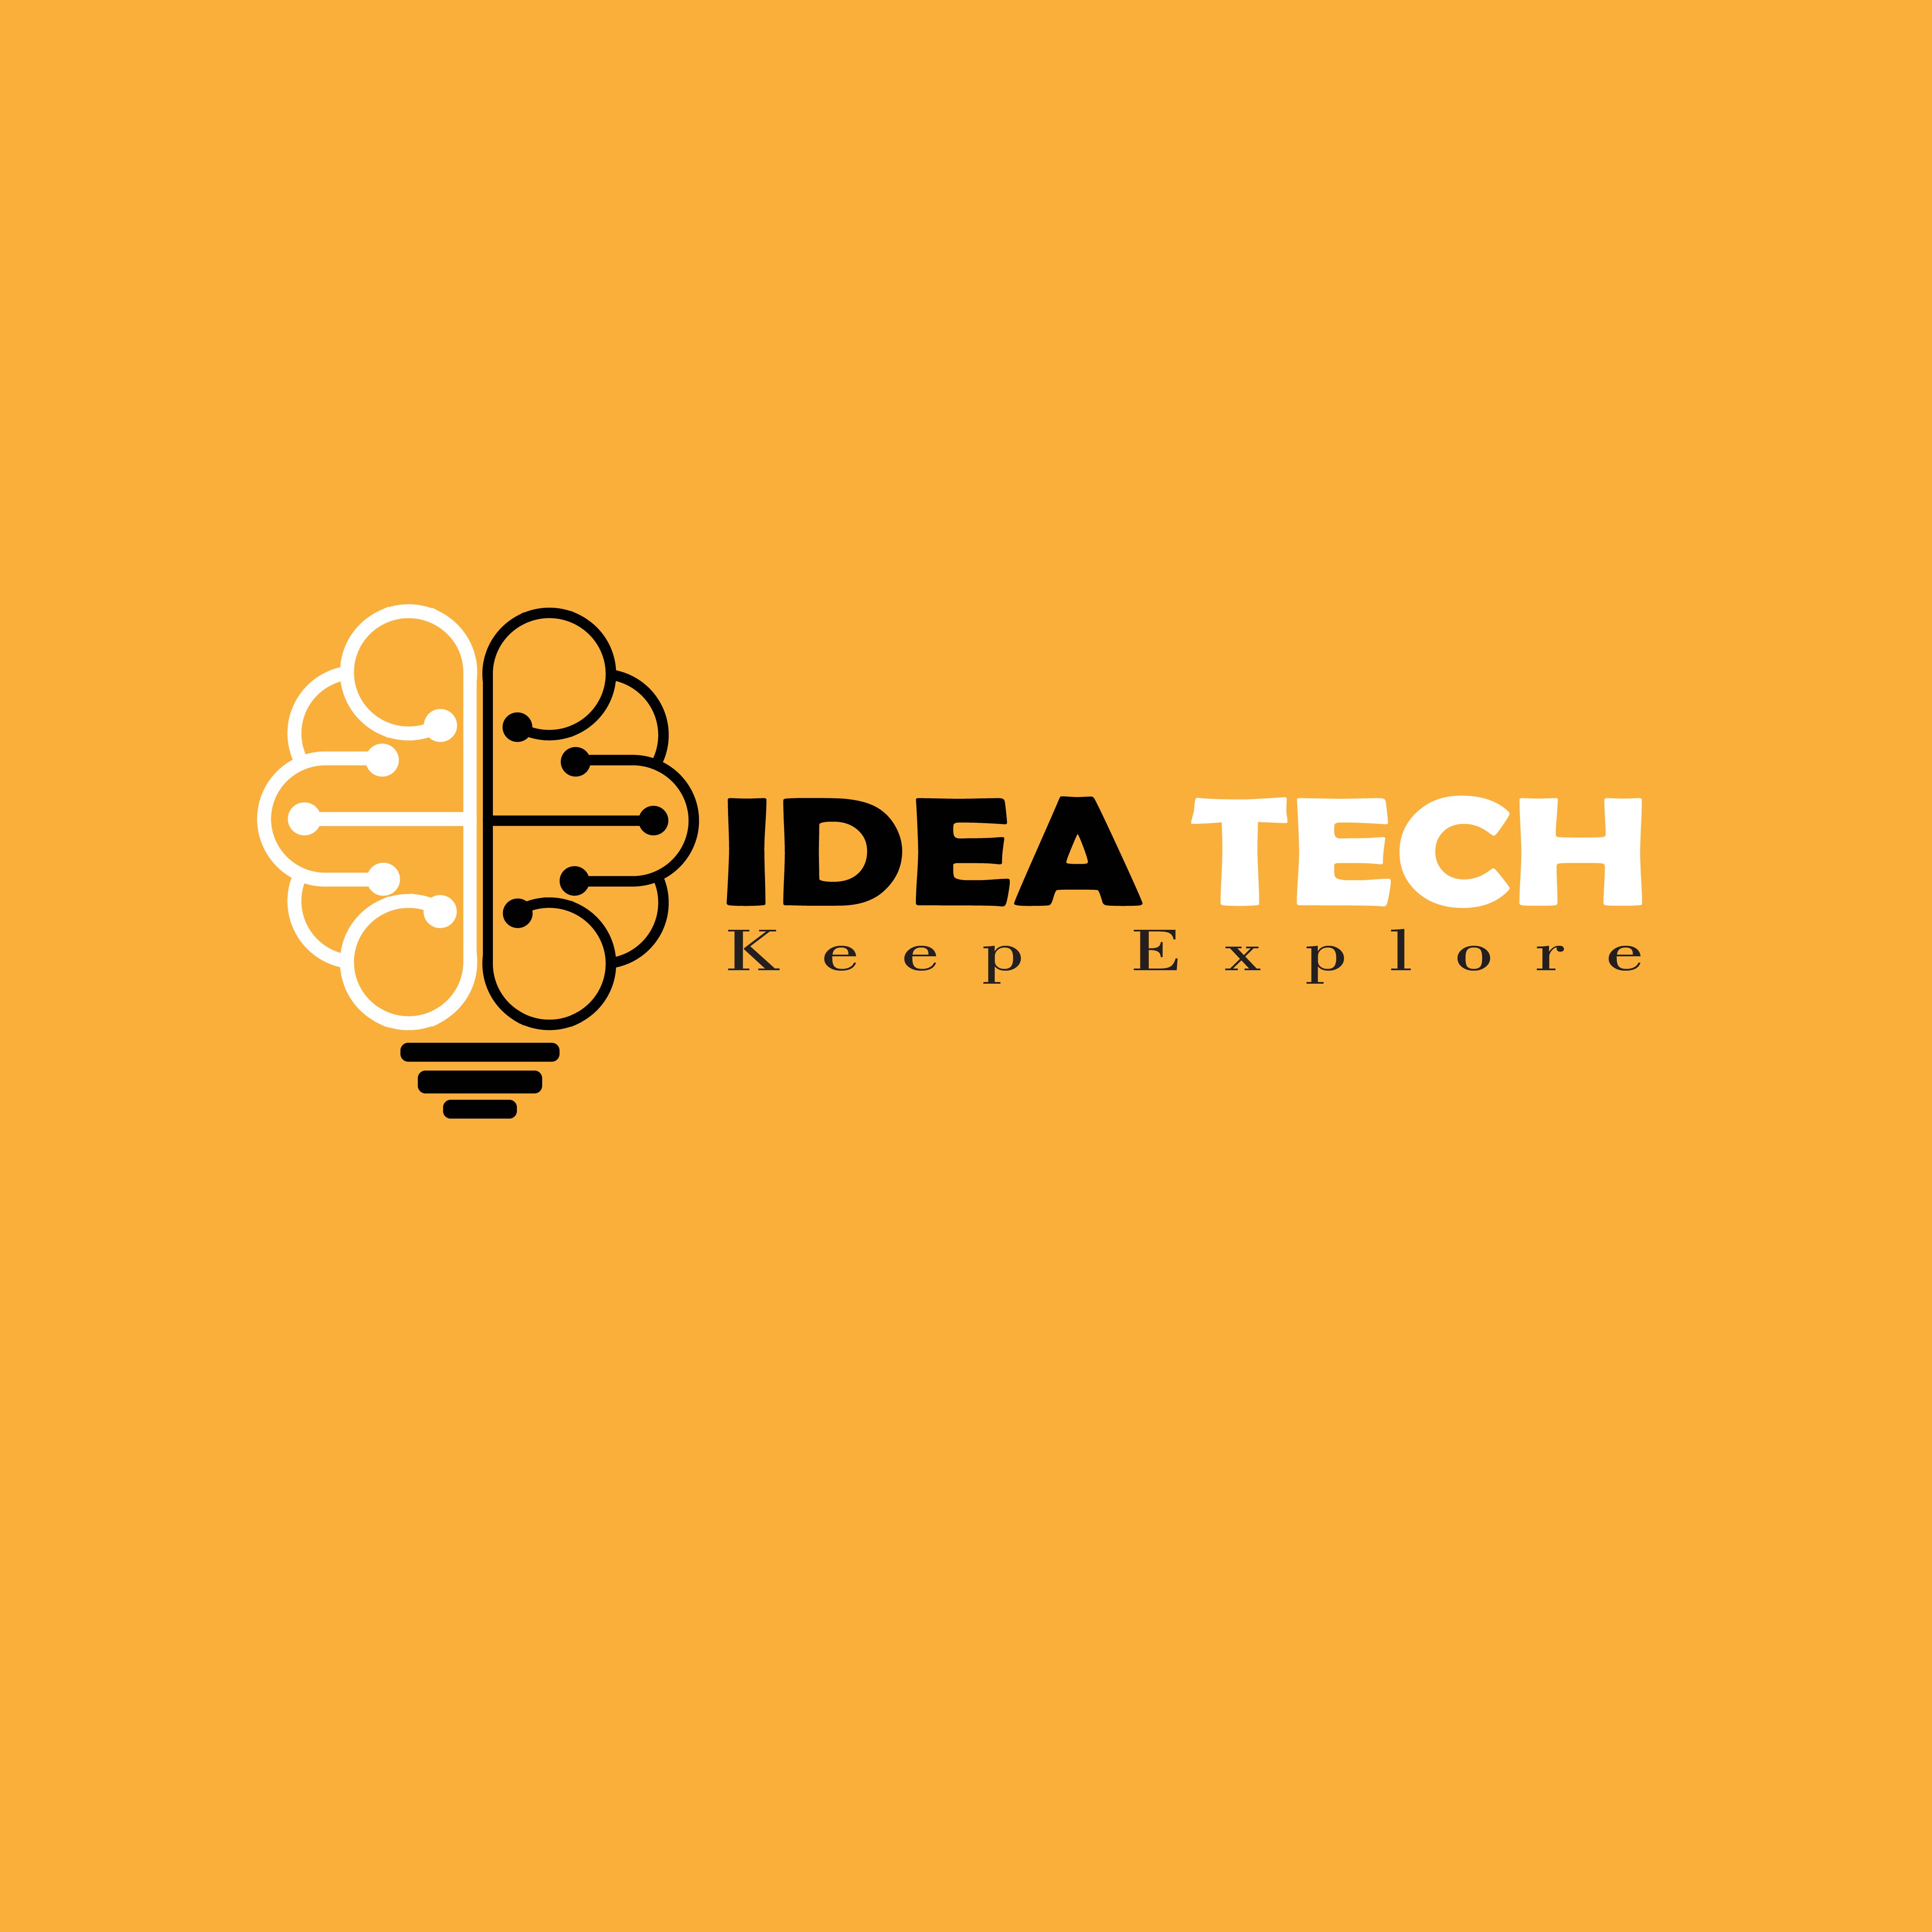 High Tech Company Logo Design Minimal Design For Business cover image.